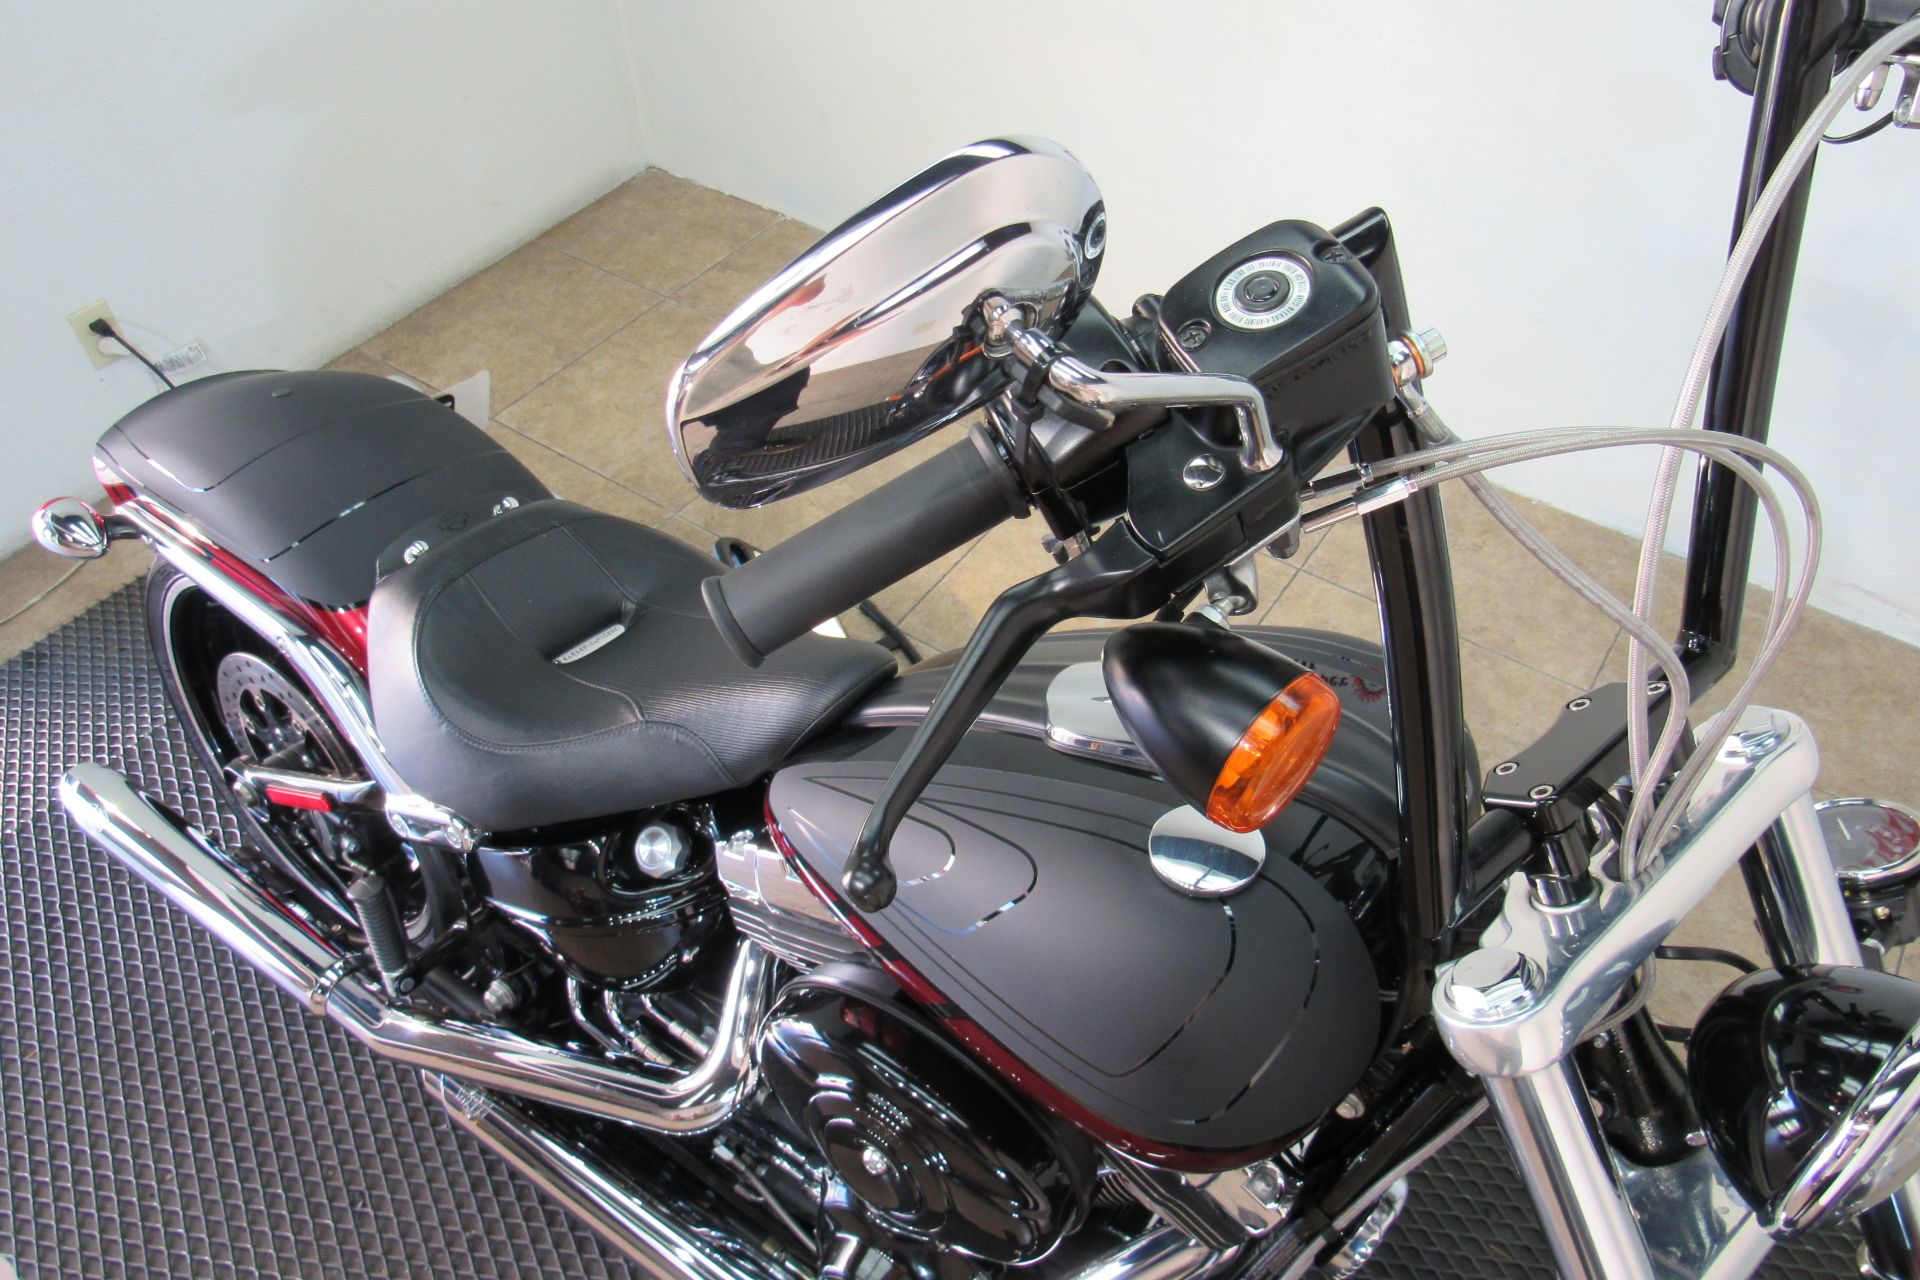 2014 Harley-Davidson Breakout® in Temecula, California - Photo 19